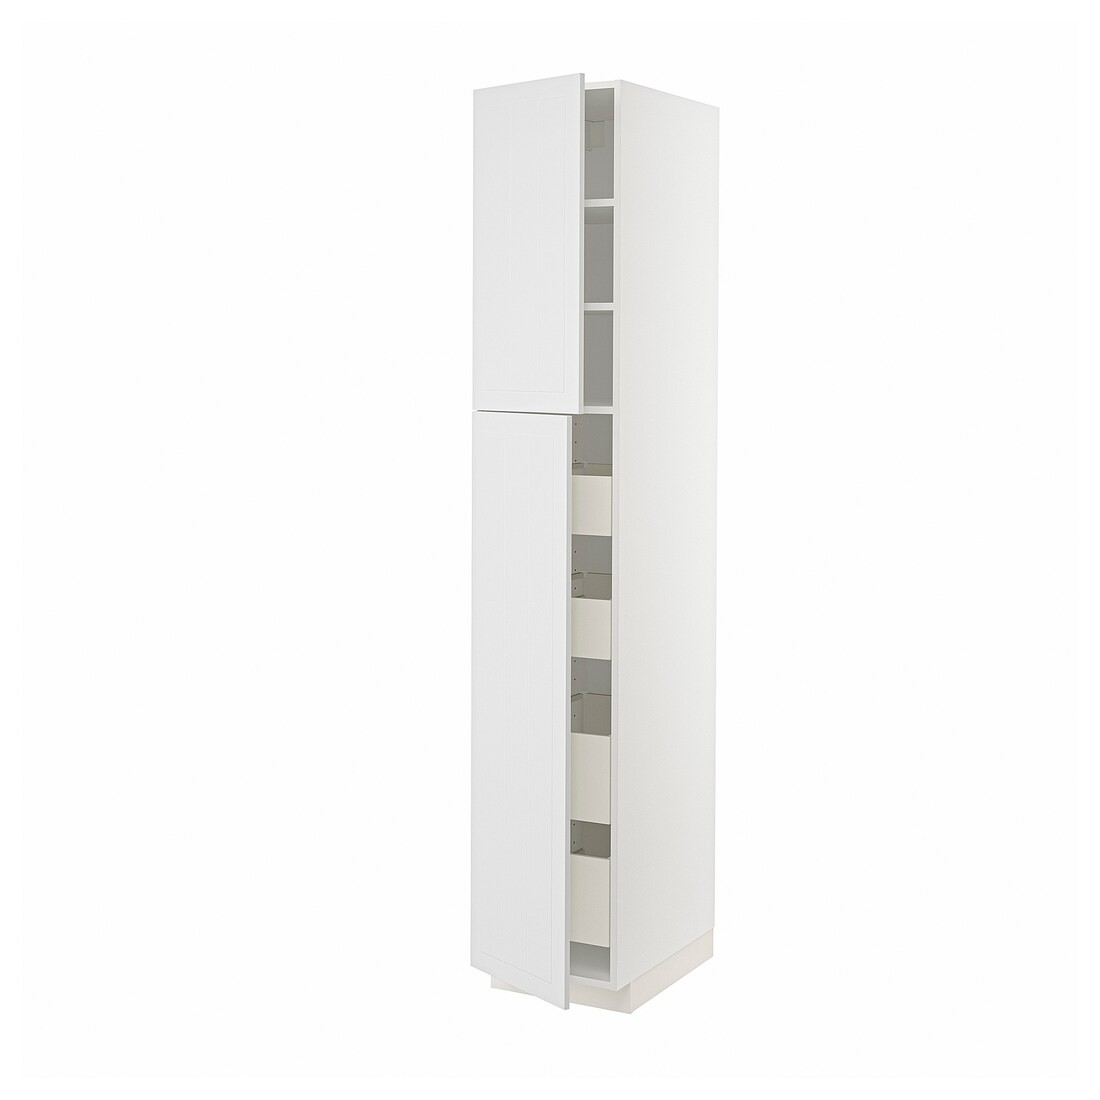 IKEA METOD МЕТОД / MAXIMERA МАКСИМЕРА Шкаф высокий 2 двери / 4 ящика, белый / Stensund белый, 40x60x220 см 19458796 | 194.587.96